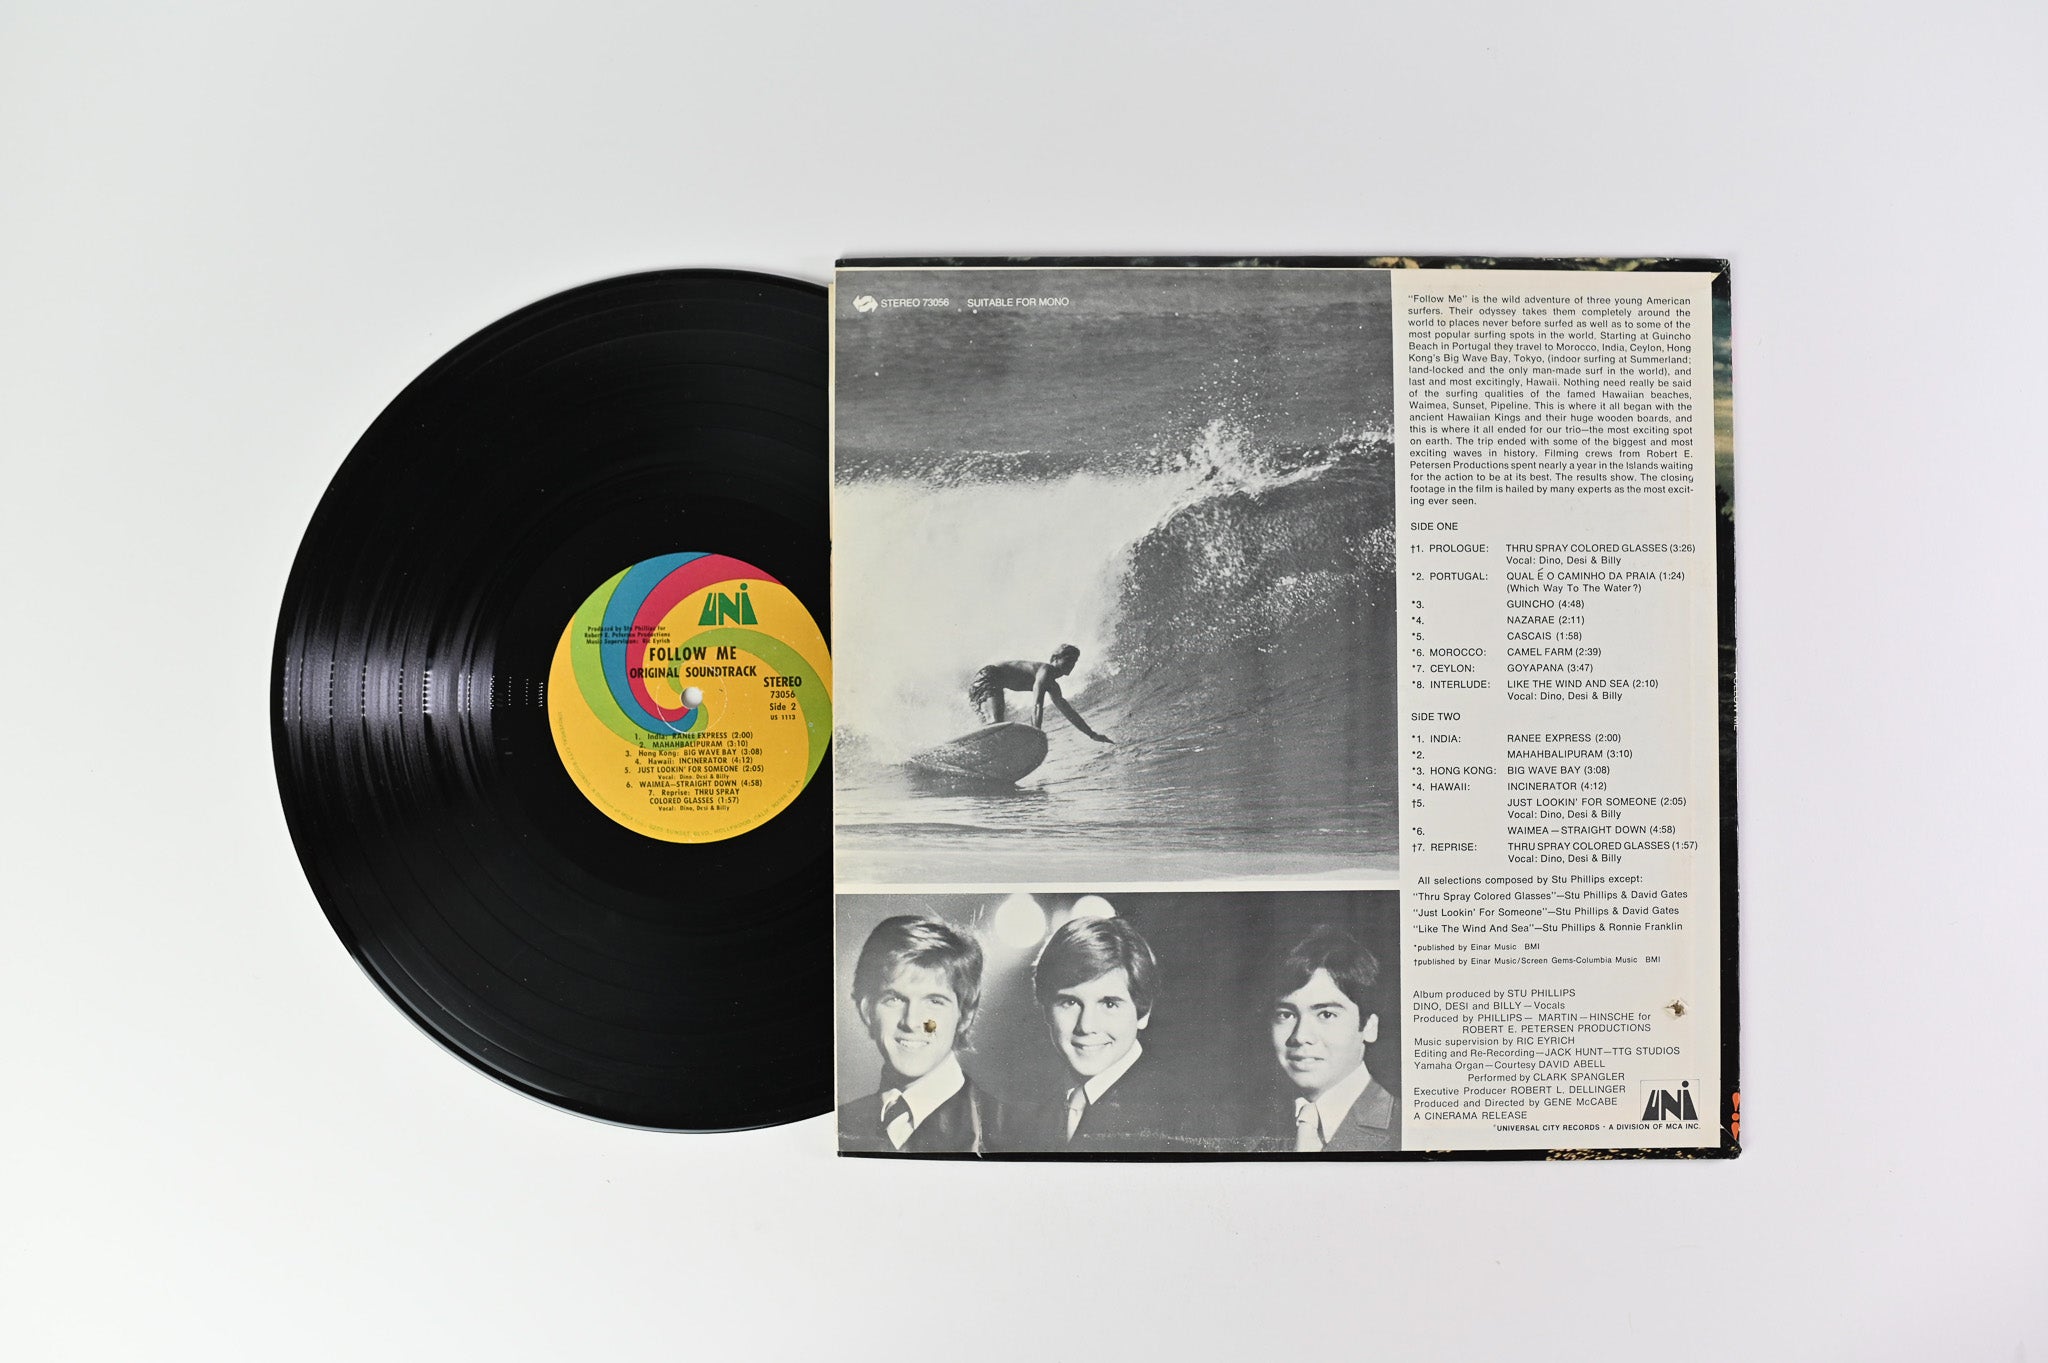 Stu Phillips - Follow Me (Original Soundtrack Album) on UNI Records